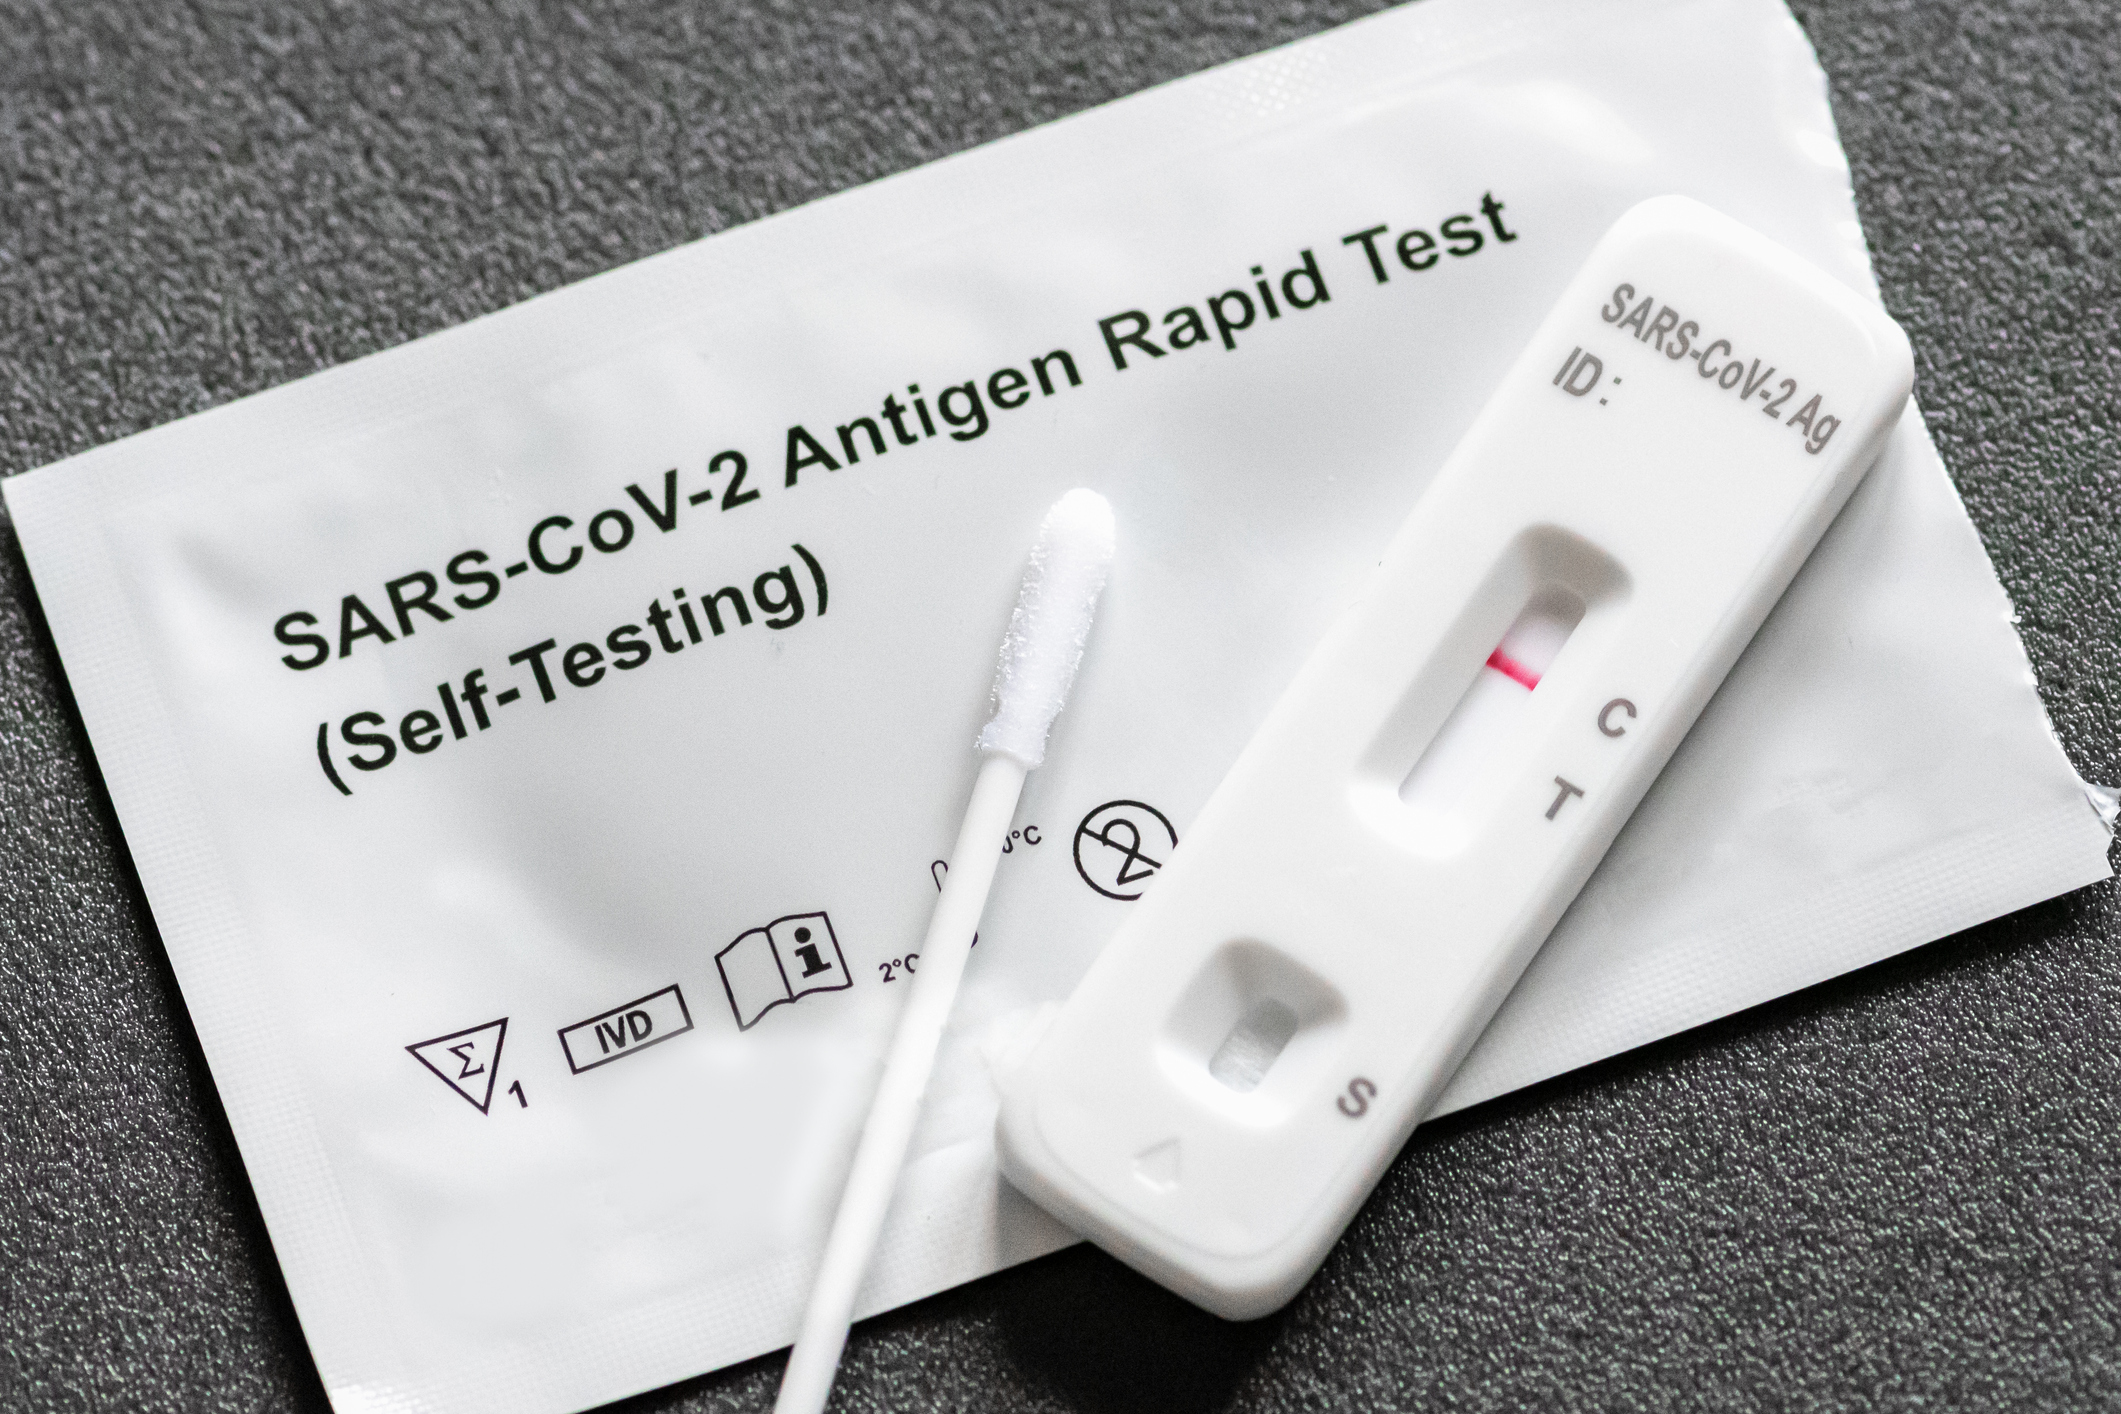 rapid antigen test kit